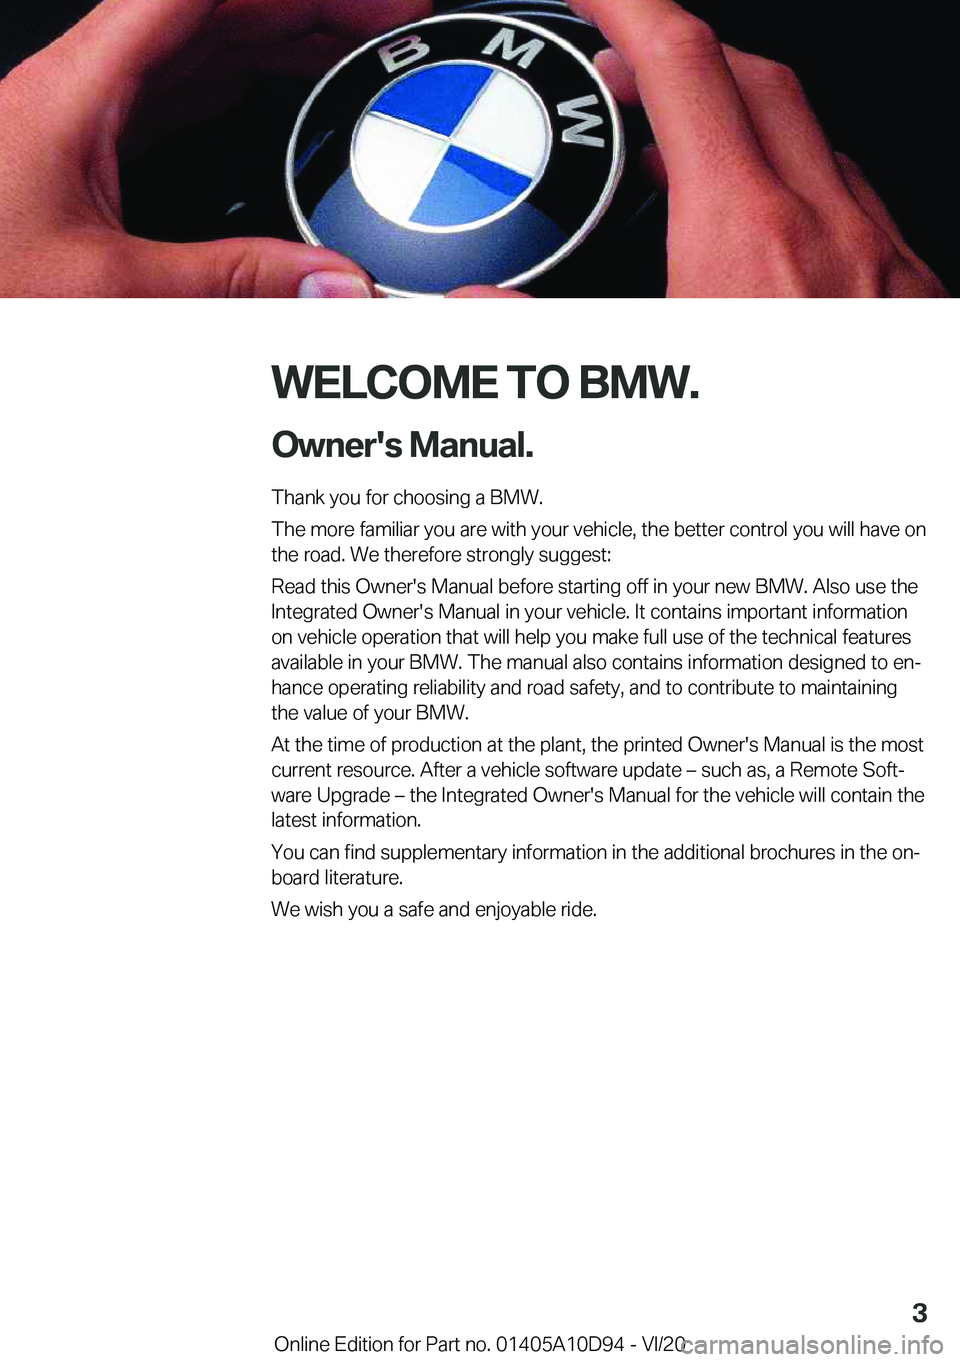 BMW M8 GRAN COUPE 2021  Owners Manual �W�E�L�C�O�M�E��T�O��B�M�W�.�O�w�n�e�r�'�s��M�a�n�u�a�l�.
�T�h�a�n�k��y�o�u��f�o�r��c�h�o�o�s�i�n�g��a��B�M�W�.
�T�h�e��m�o�r�e��f�a�m�i�l�i�a�r��y�o�u��a�r�e��w�i�t�h��y�o�u�r��v�e